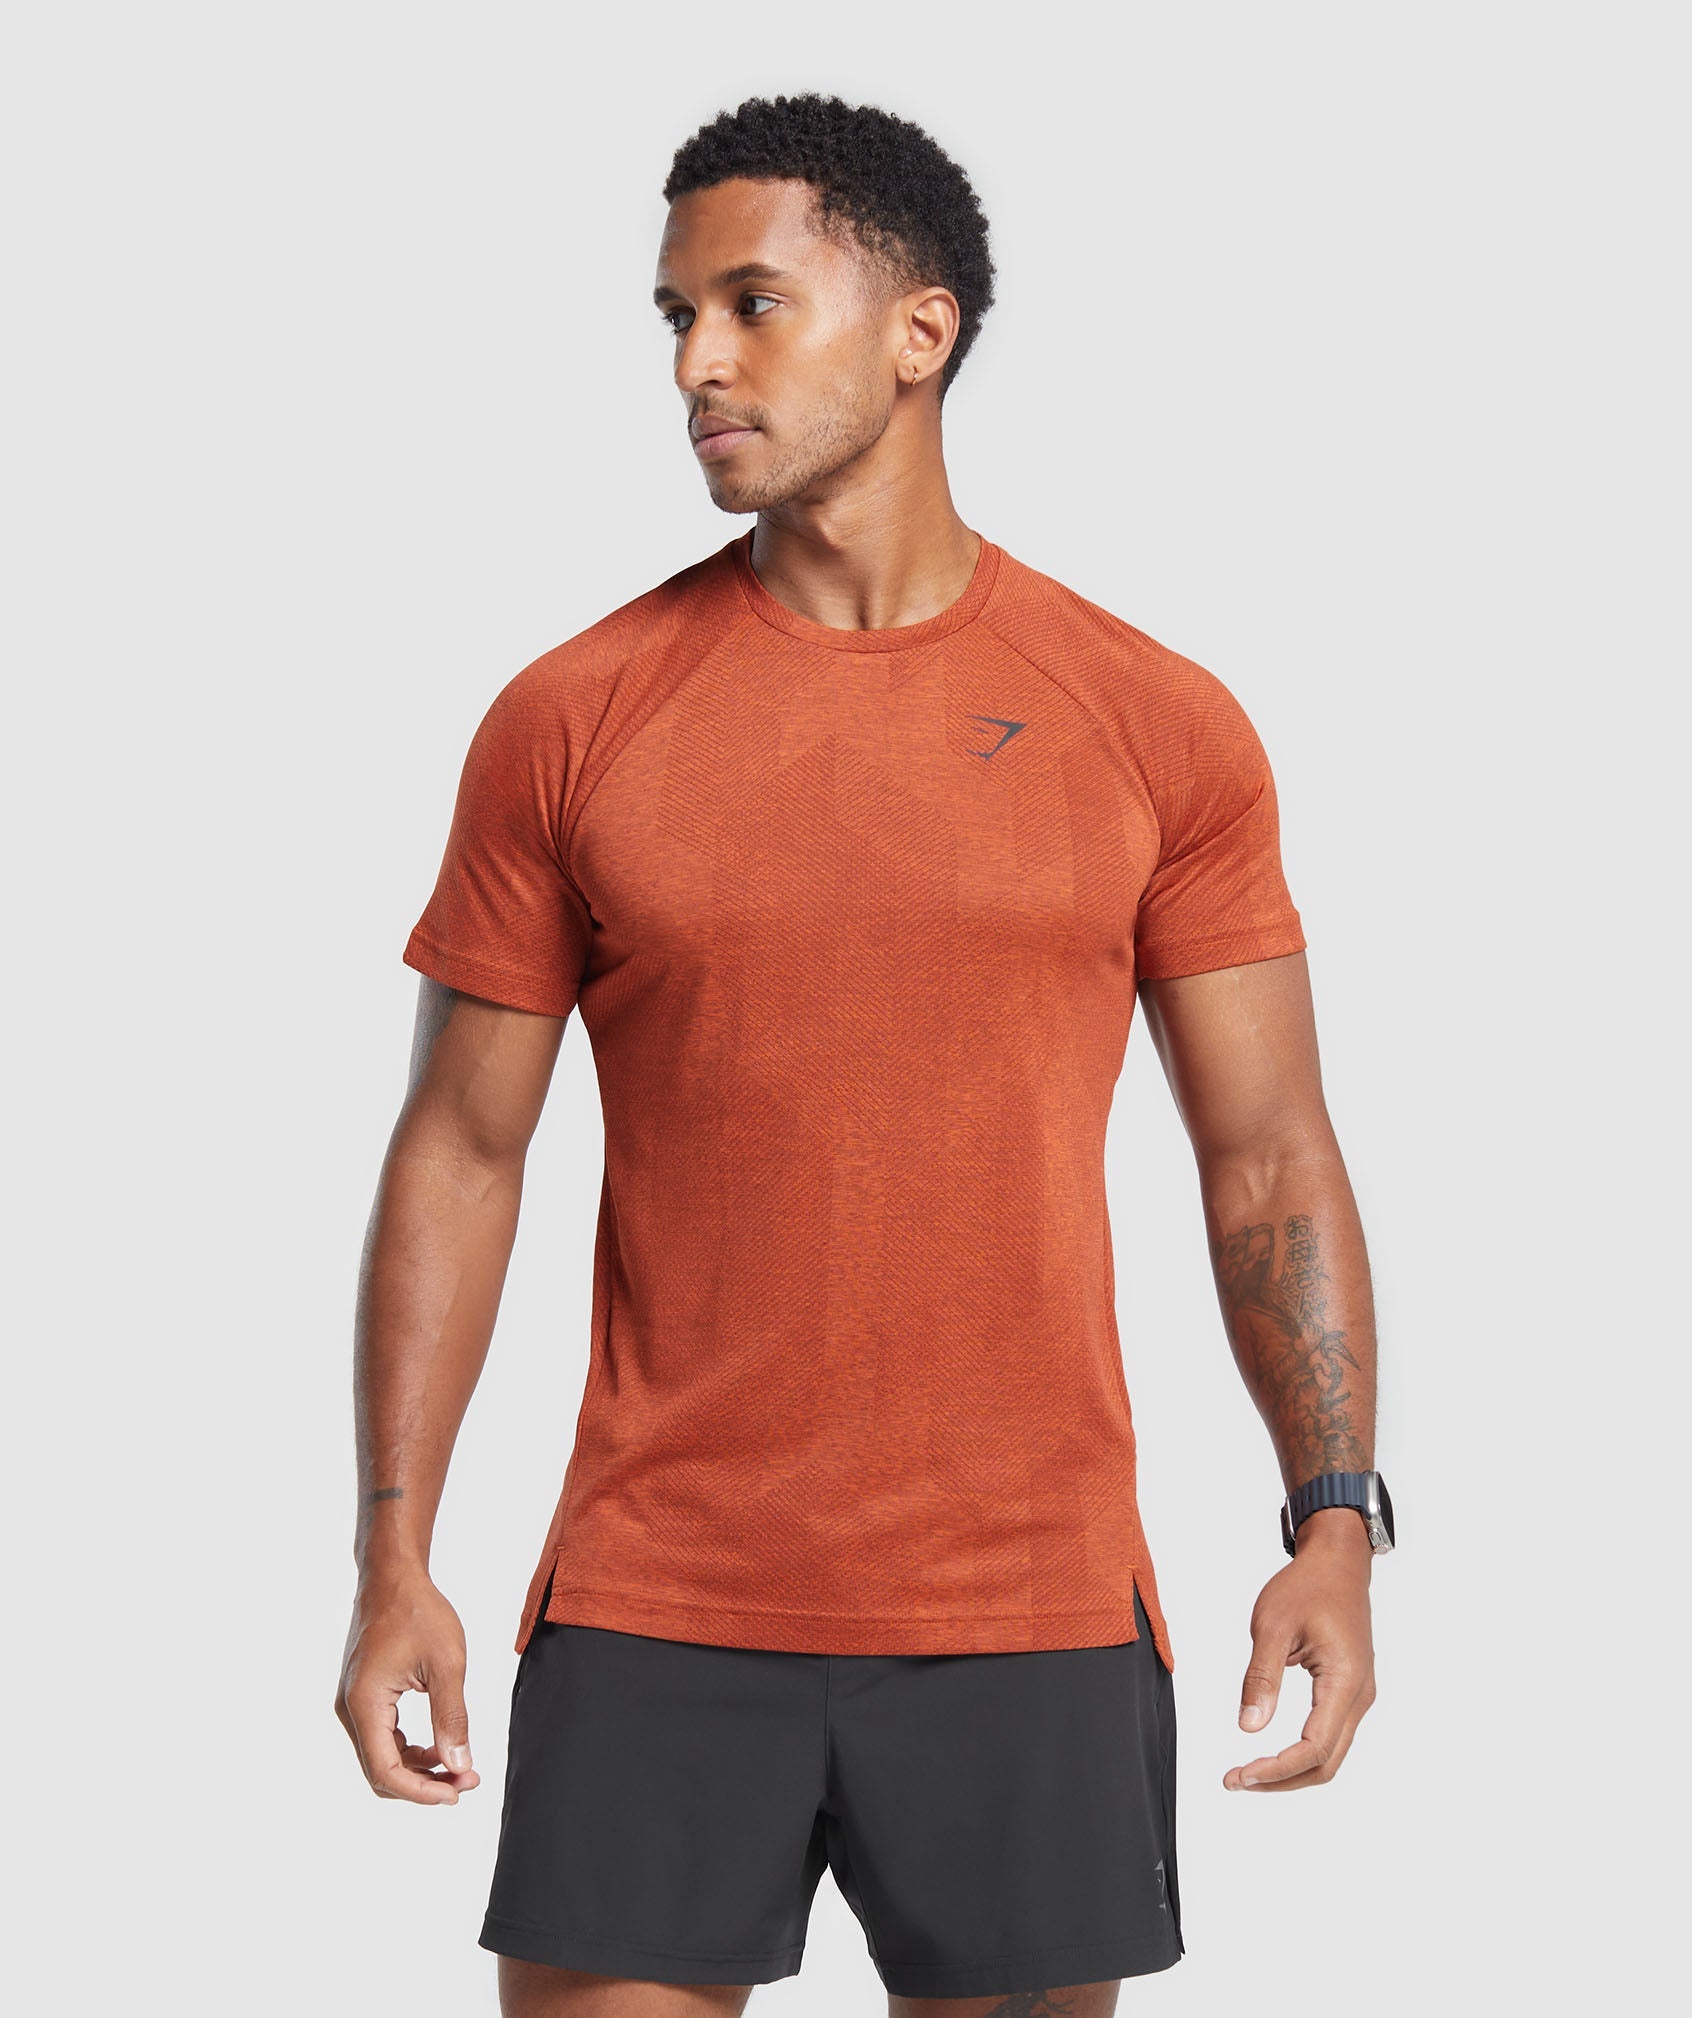 Apex T-Shirt in Rust Orange/Rust Brown